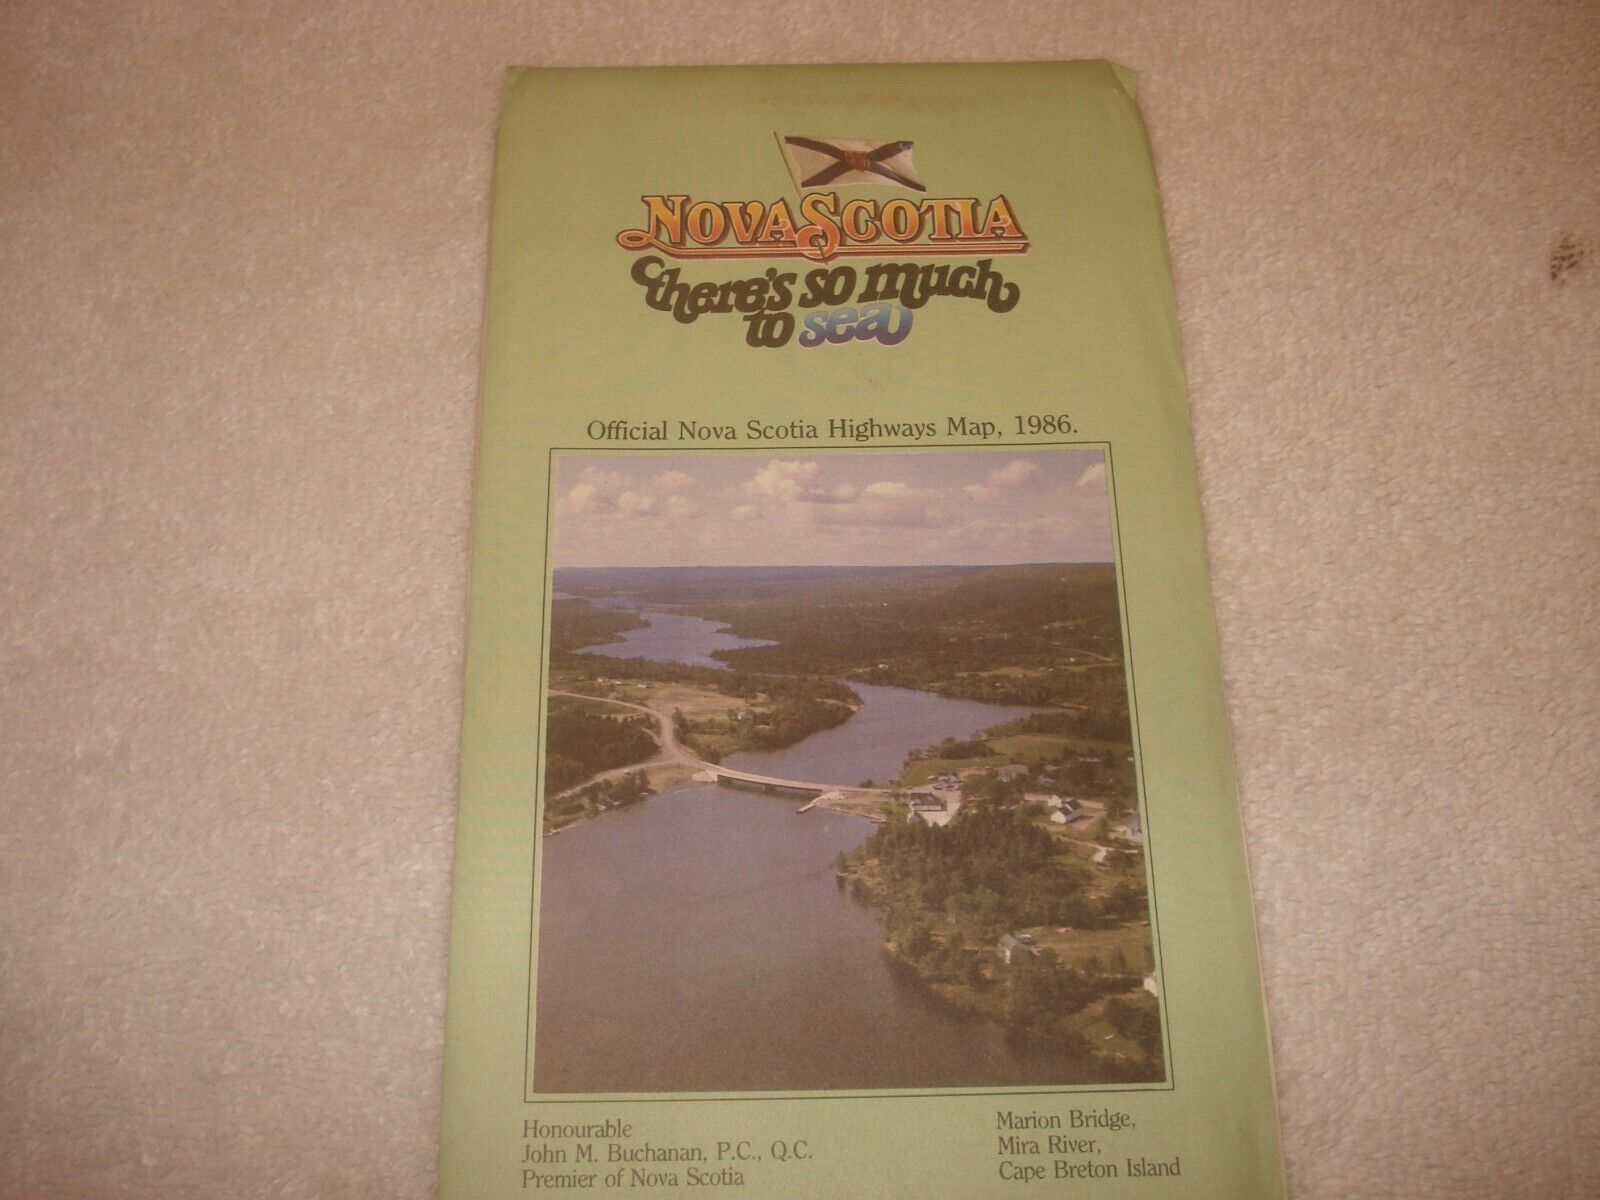 1986 Official Nova Scotia Highways Map